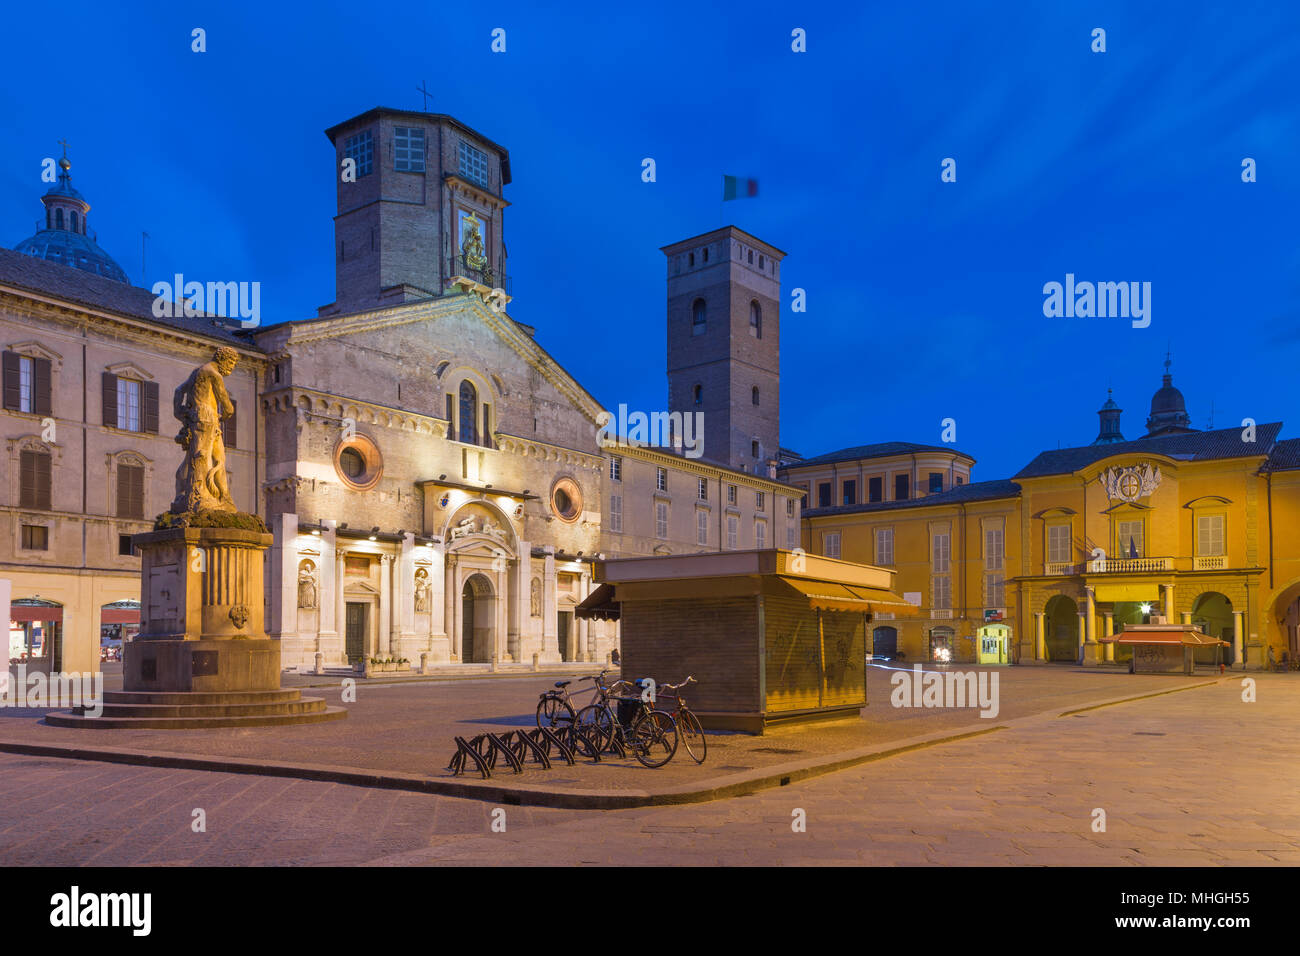 Reggio Emilia - Piazza del Duomo au crépuscule. Banque D'Images